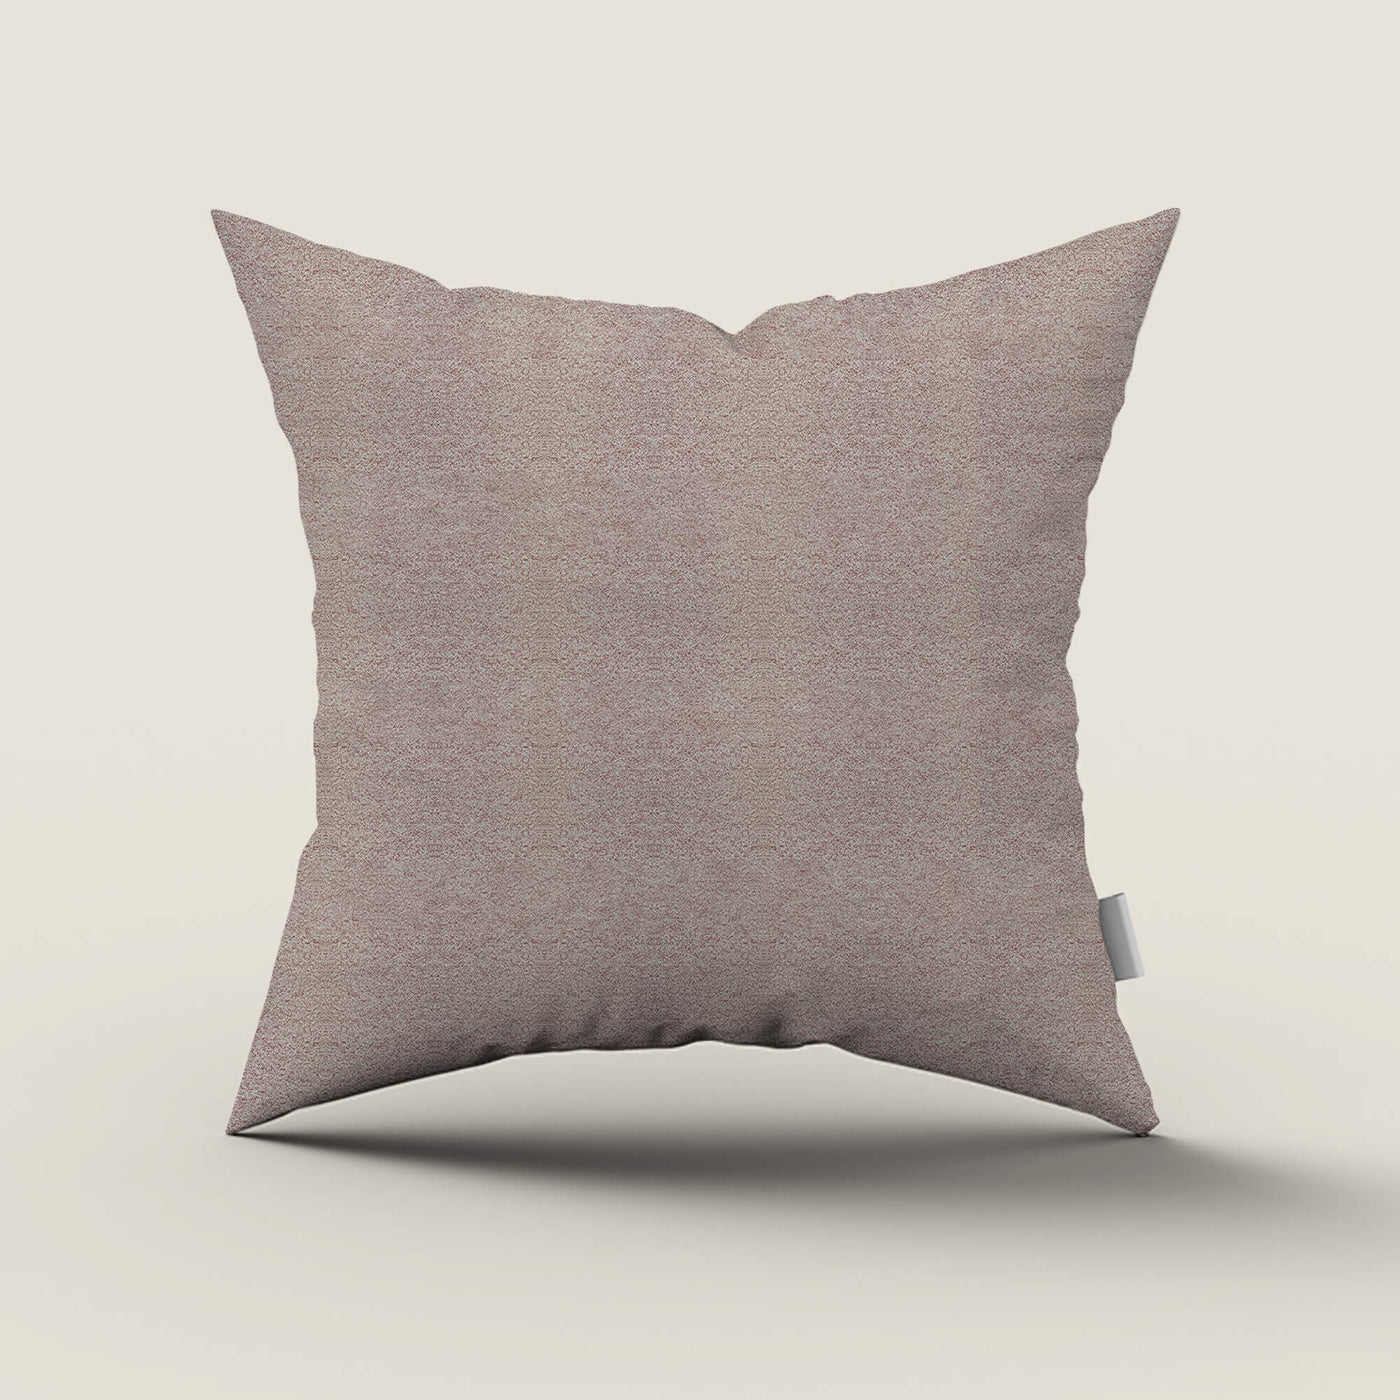 PENGI Waterproof Outdoor Throw Pillows 1 Pcs - Desert